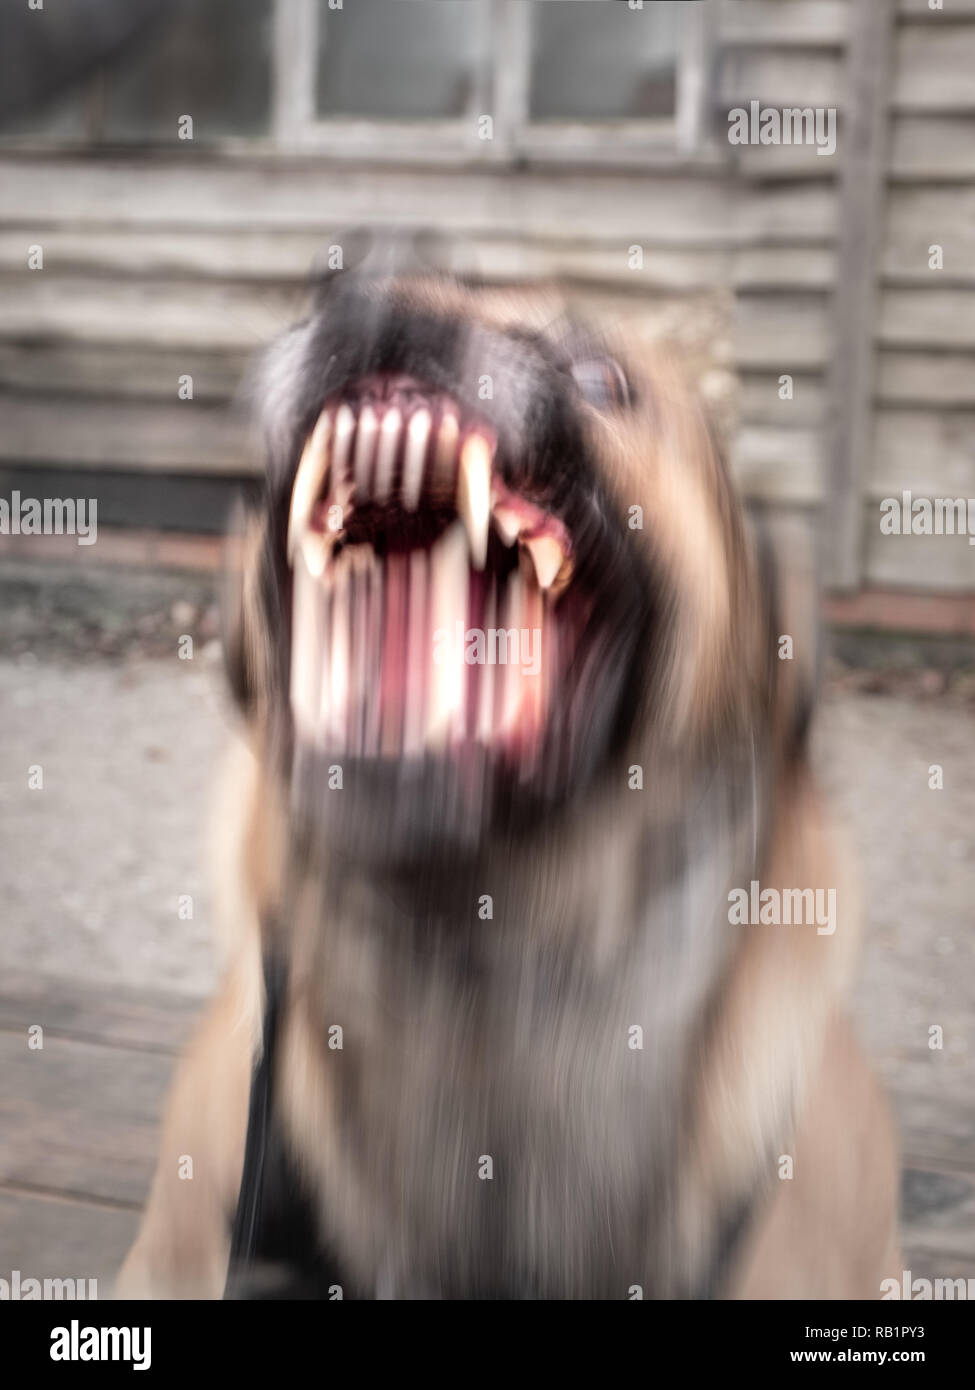 Aggressive dog barking showing teeth moving Stock Photo